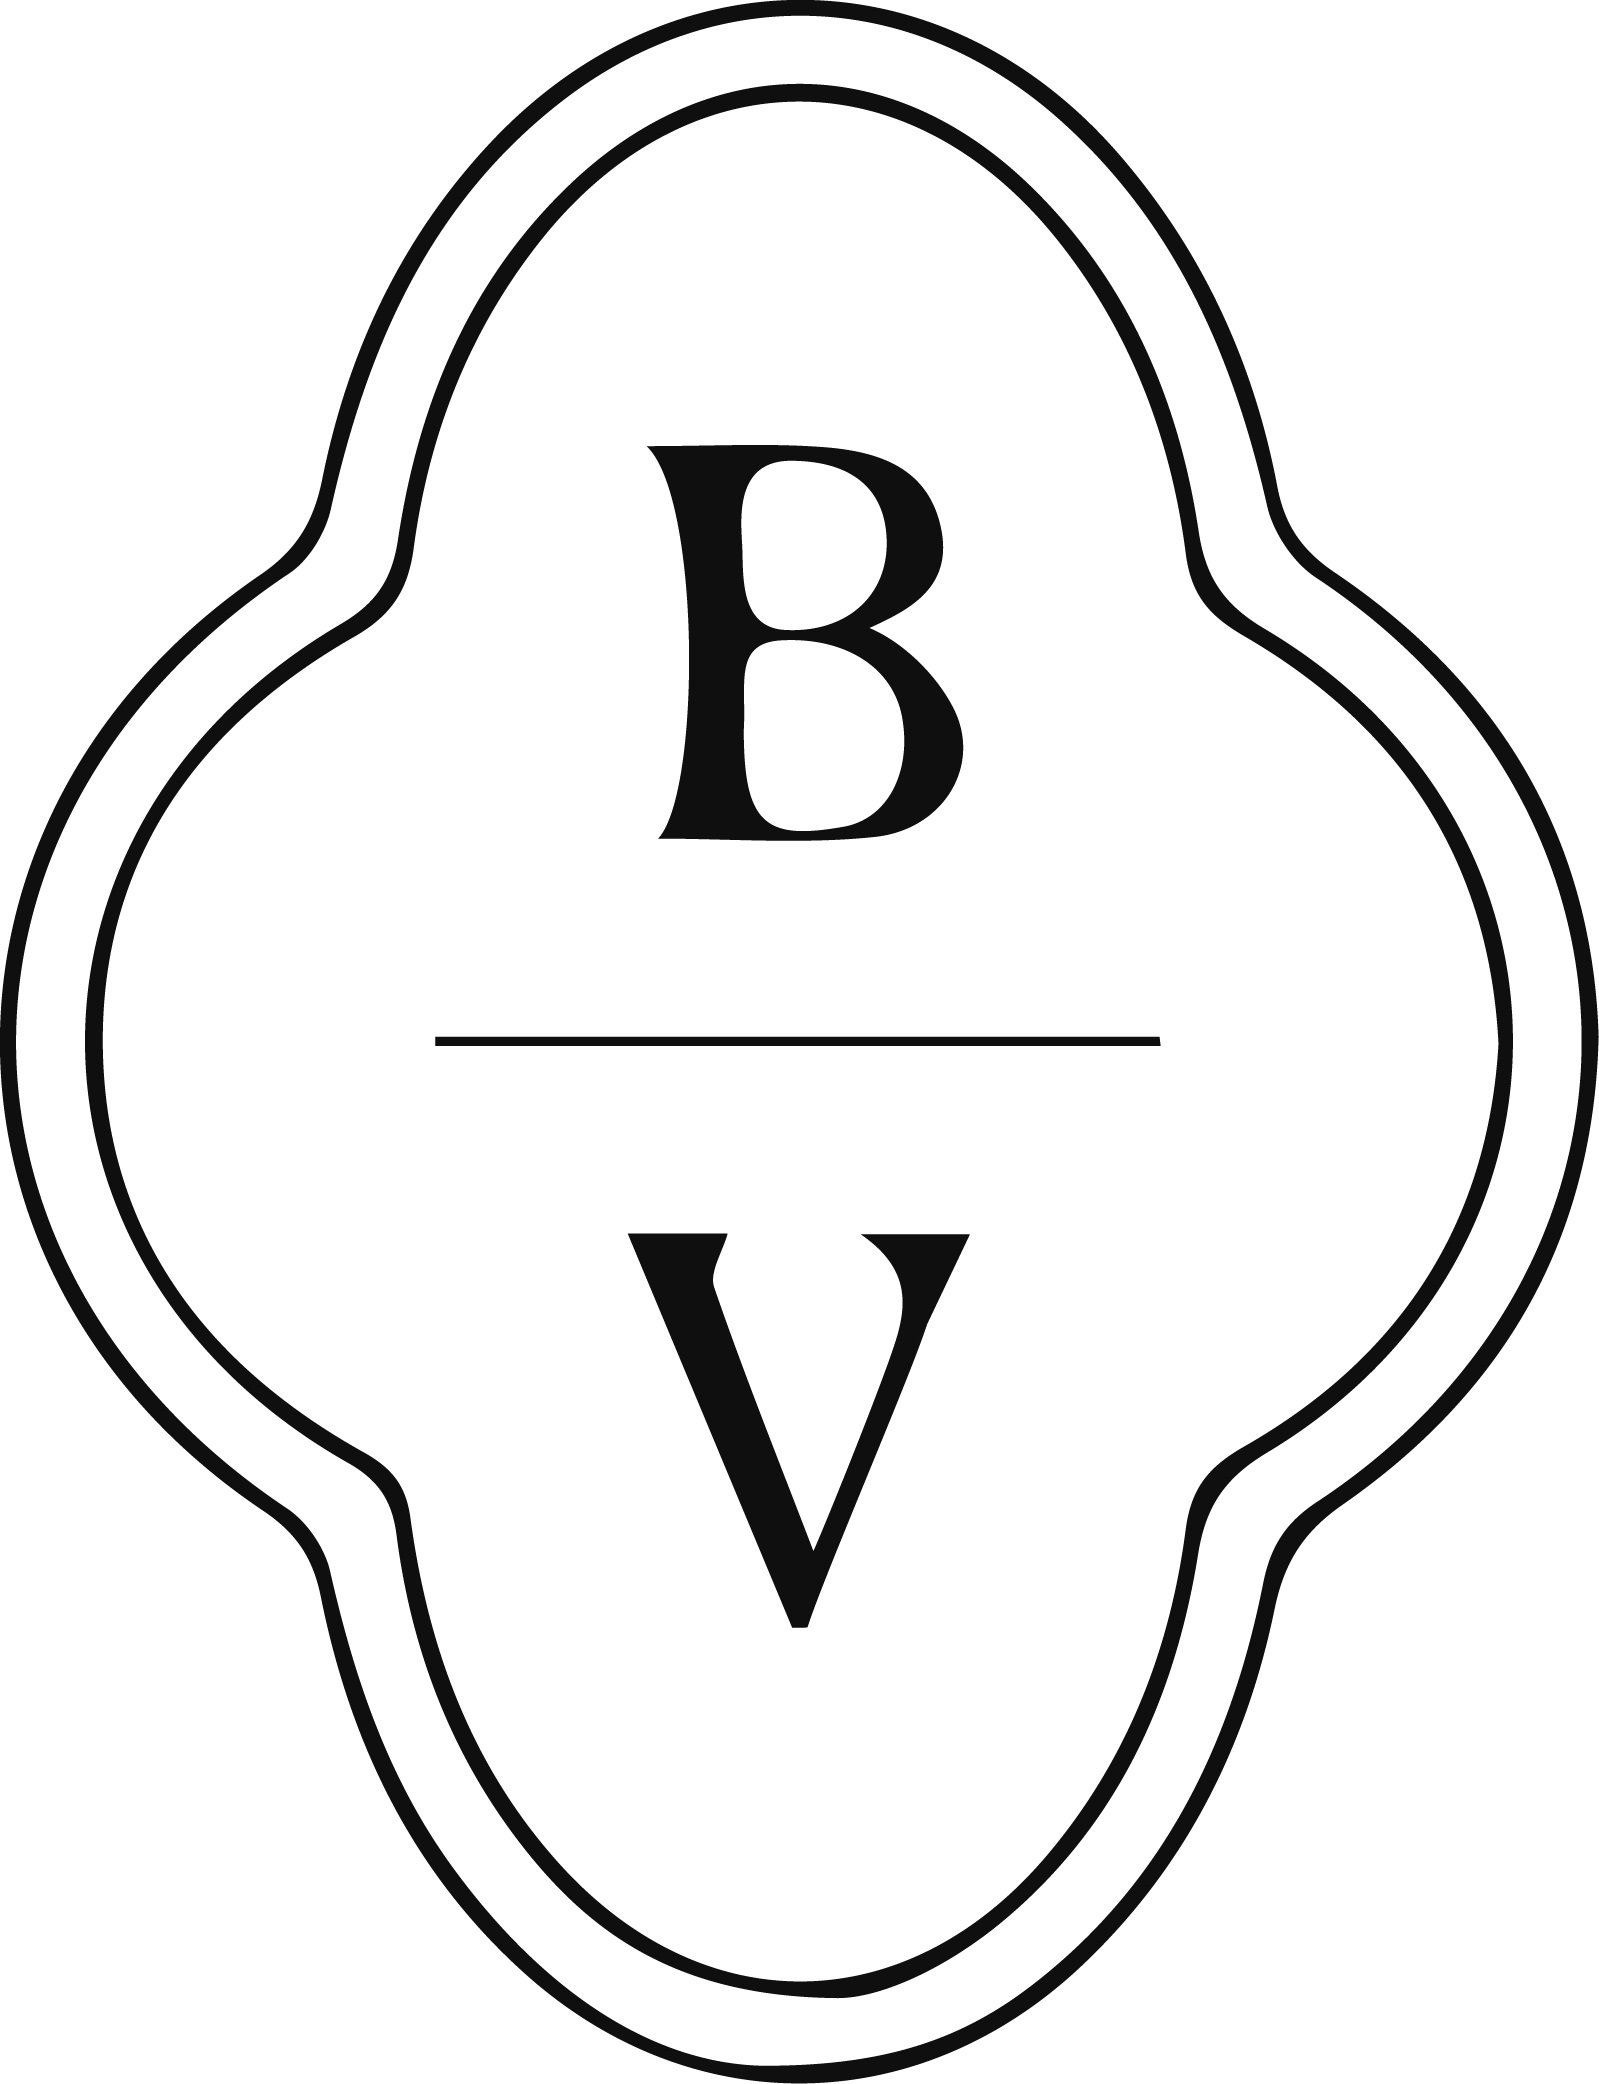 buckhead+village+logo.jpg